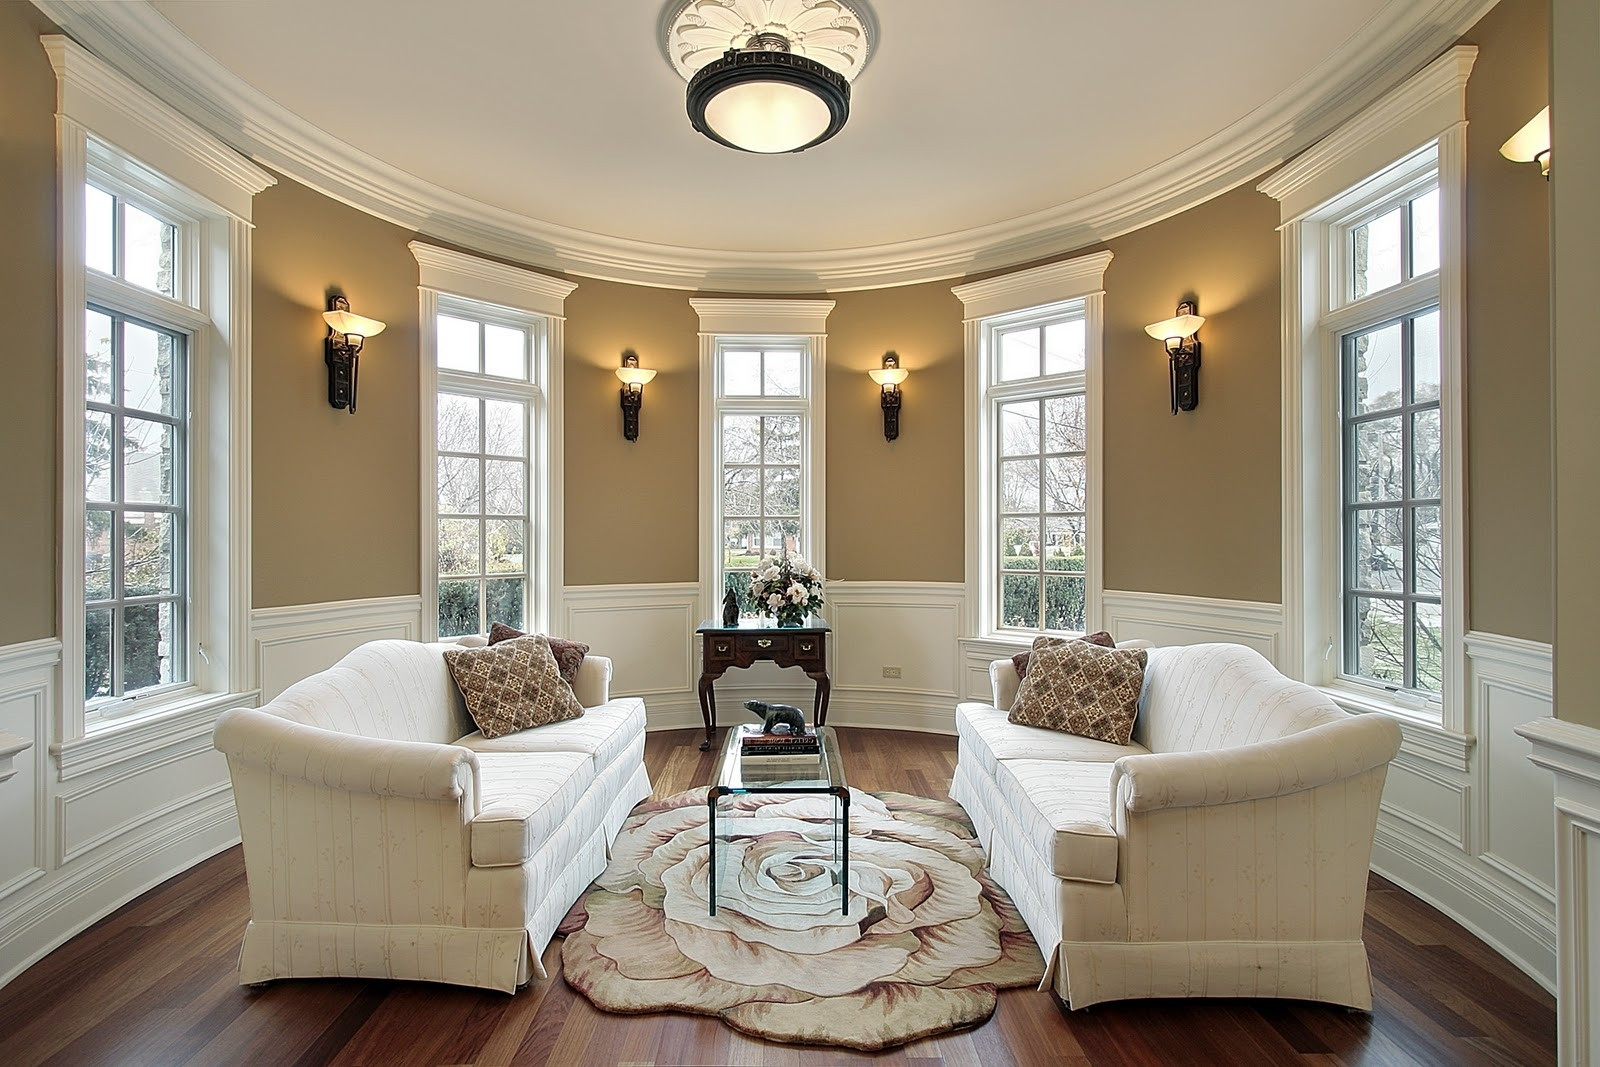 Best Lighting For Living Room
 5 Top Tips For The Best Light Fixtures